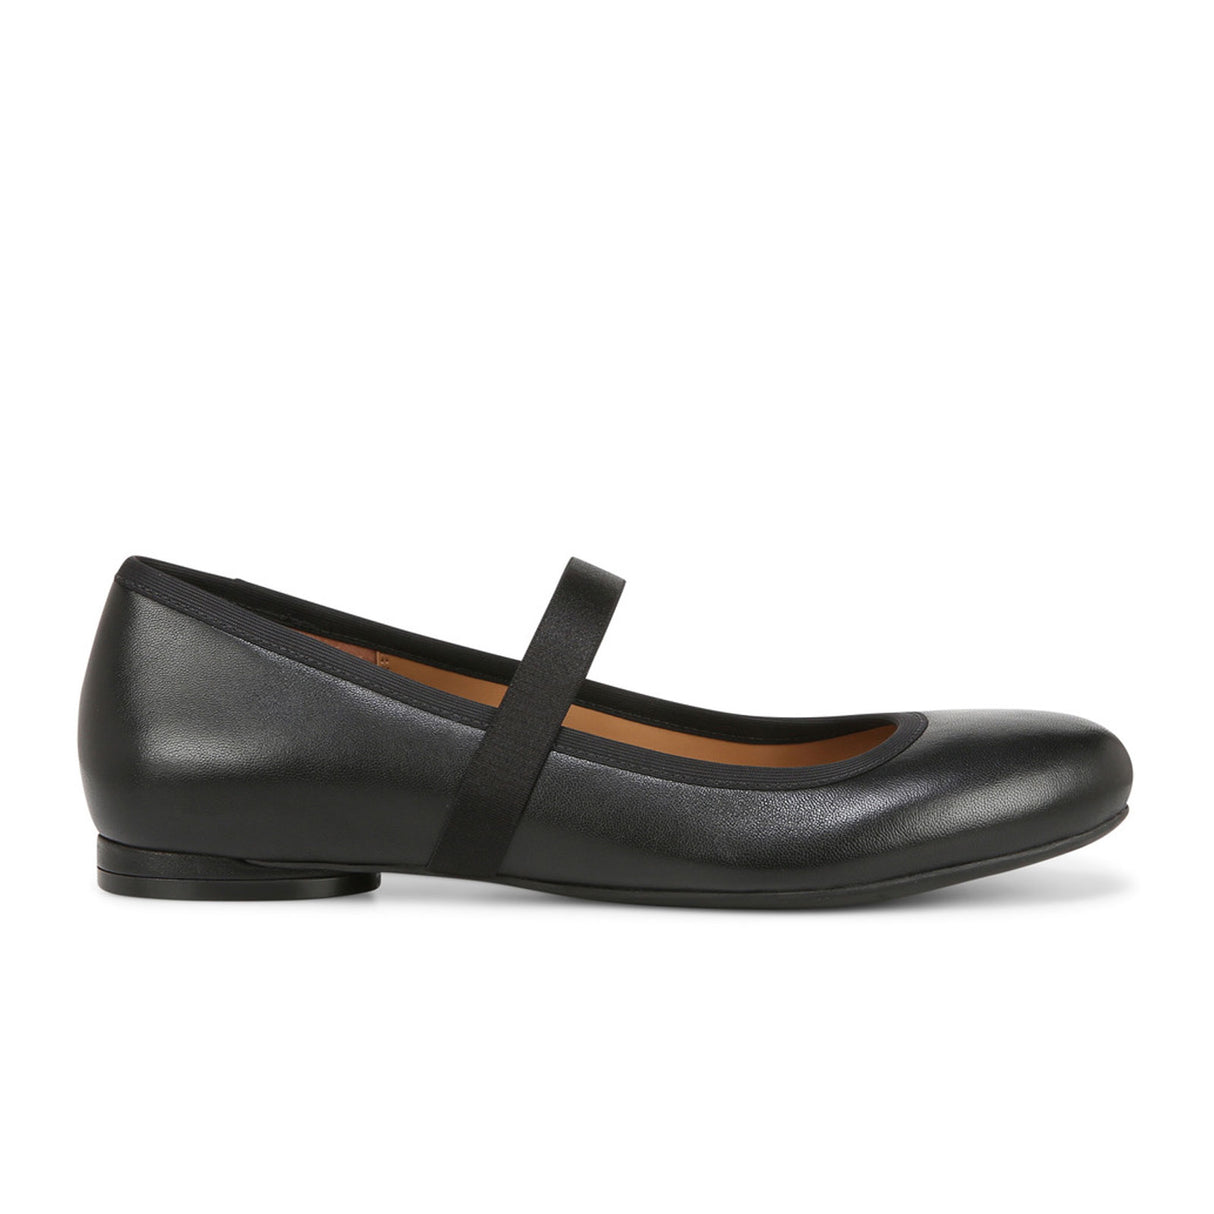 Vionic Joseline Mary Jane Flat (Women) - Black Leather Dress-Casual - Mary Janes - The Heel Shoe Fitters